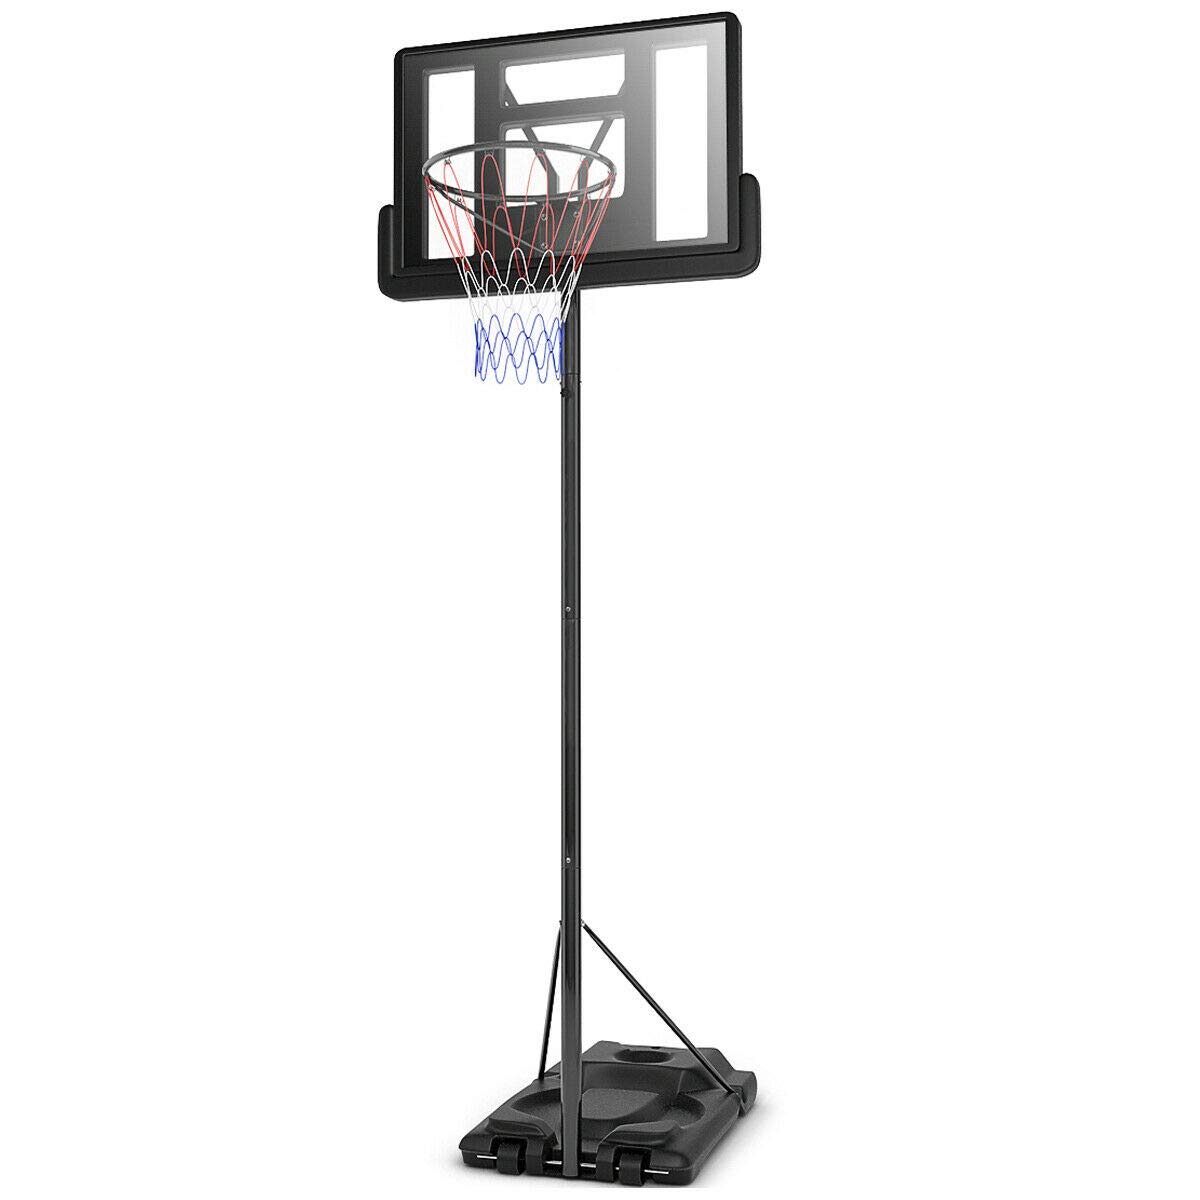 Giantex Portable Basketball Hoop System